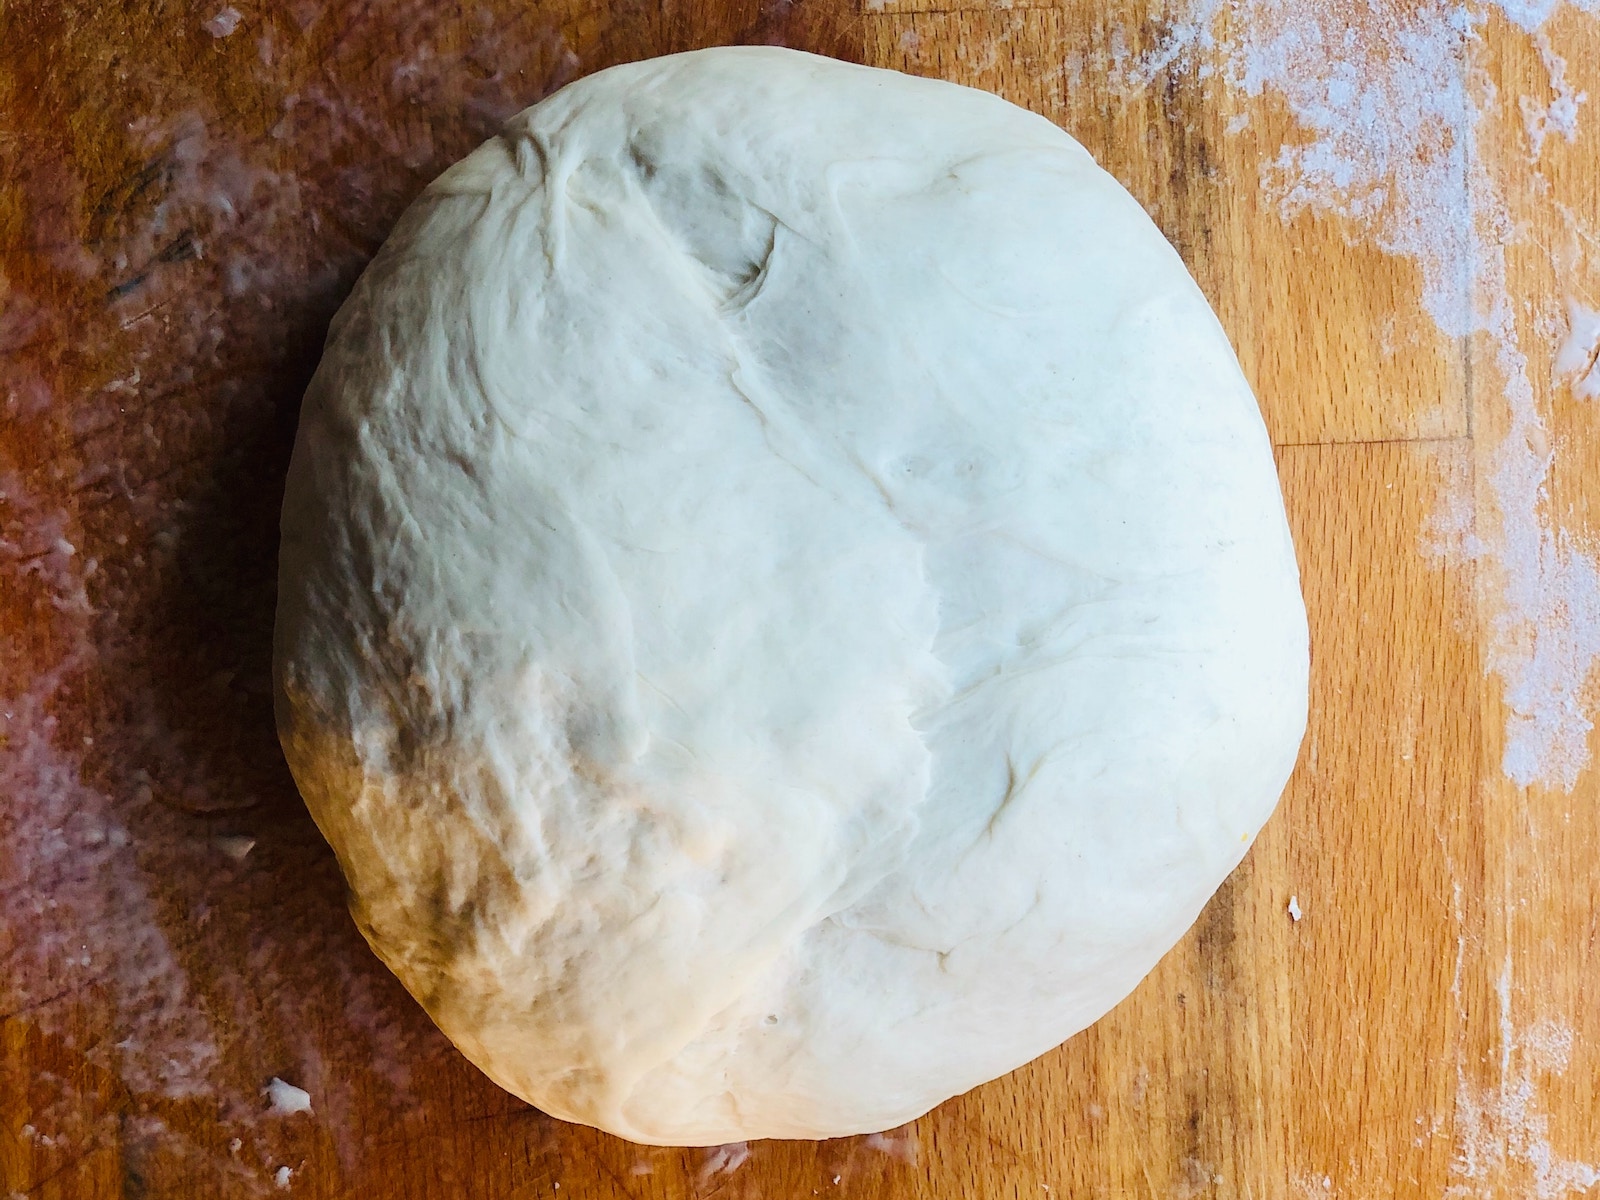 Two-ingredient pizza dough recipe